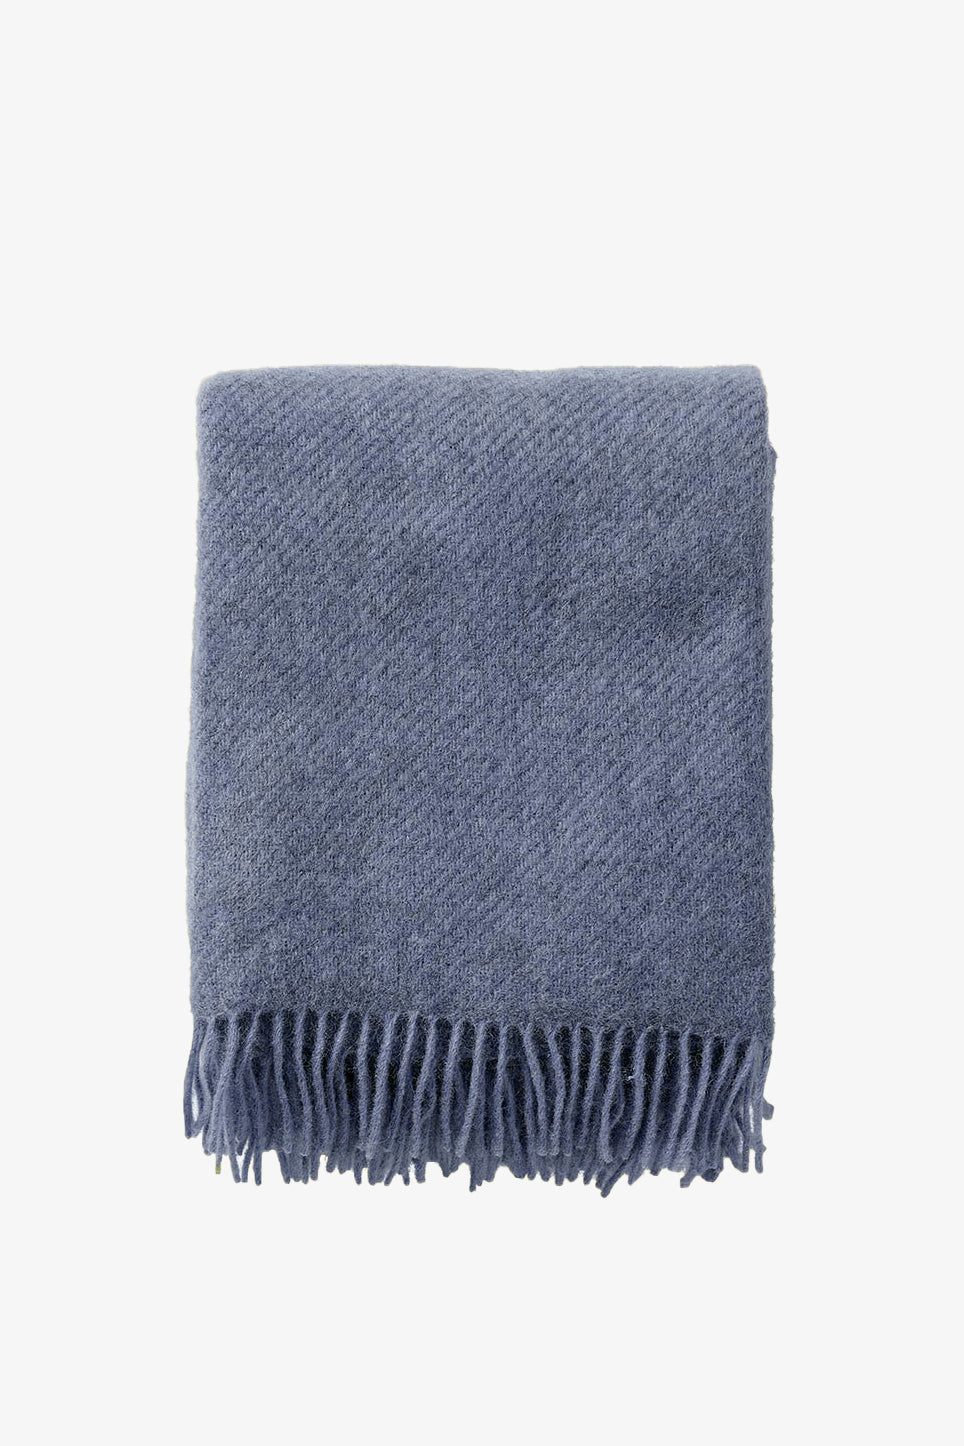 Gotland wool blanket infinity blue-Klippan Yllefabrik-[interior]-[design]-KIOSK48TH